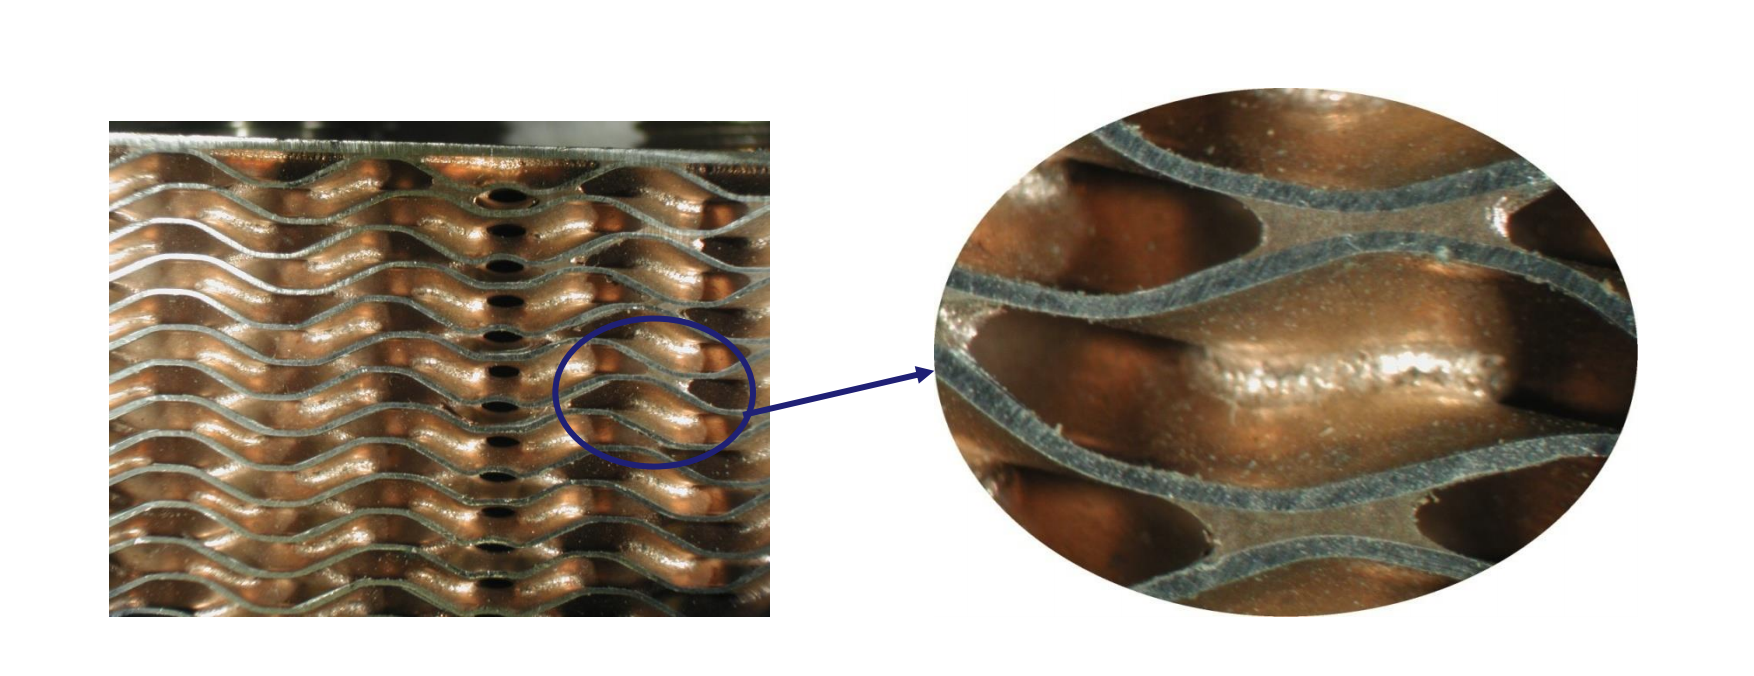 copper welding in a welded plate heat exchanger